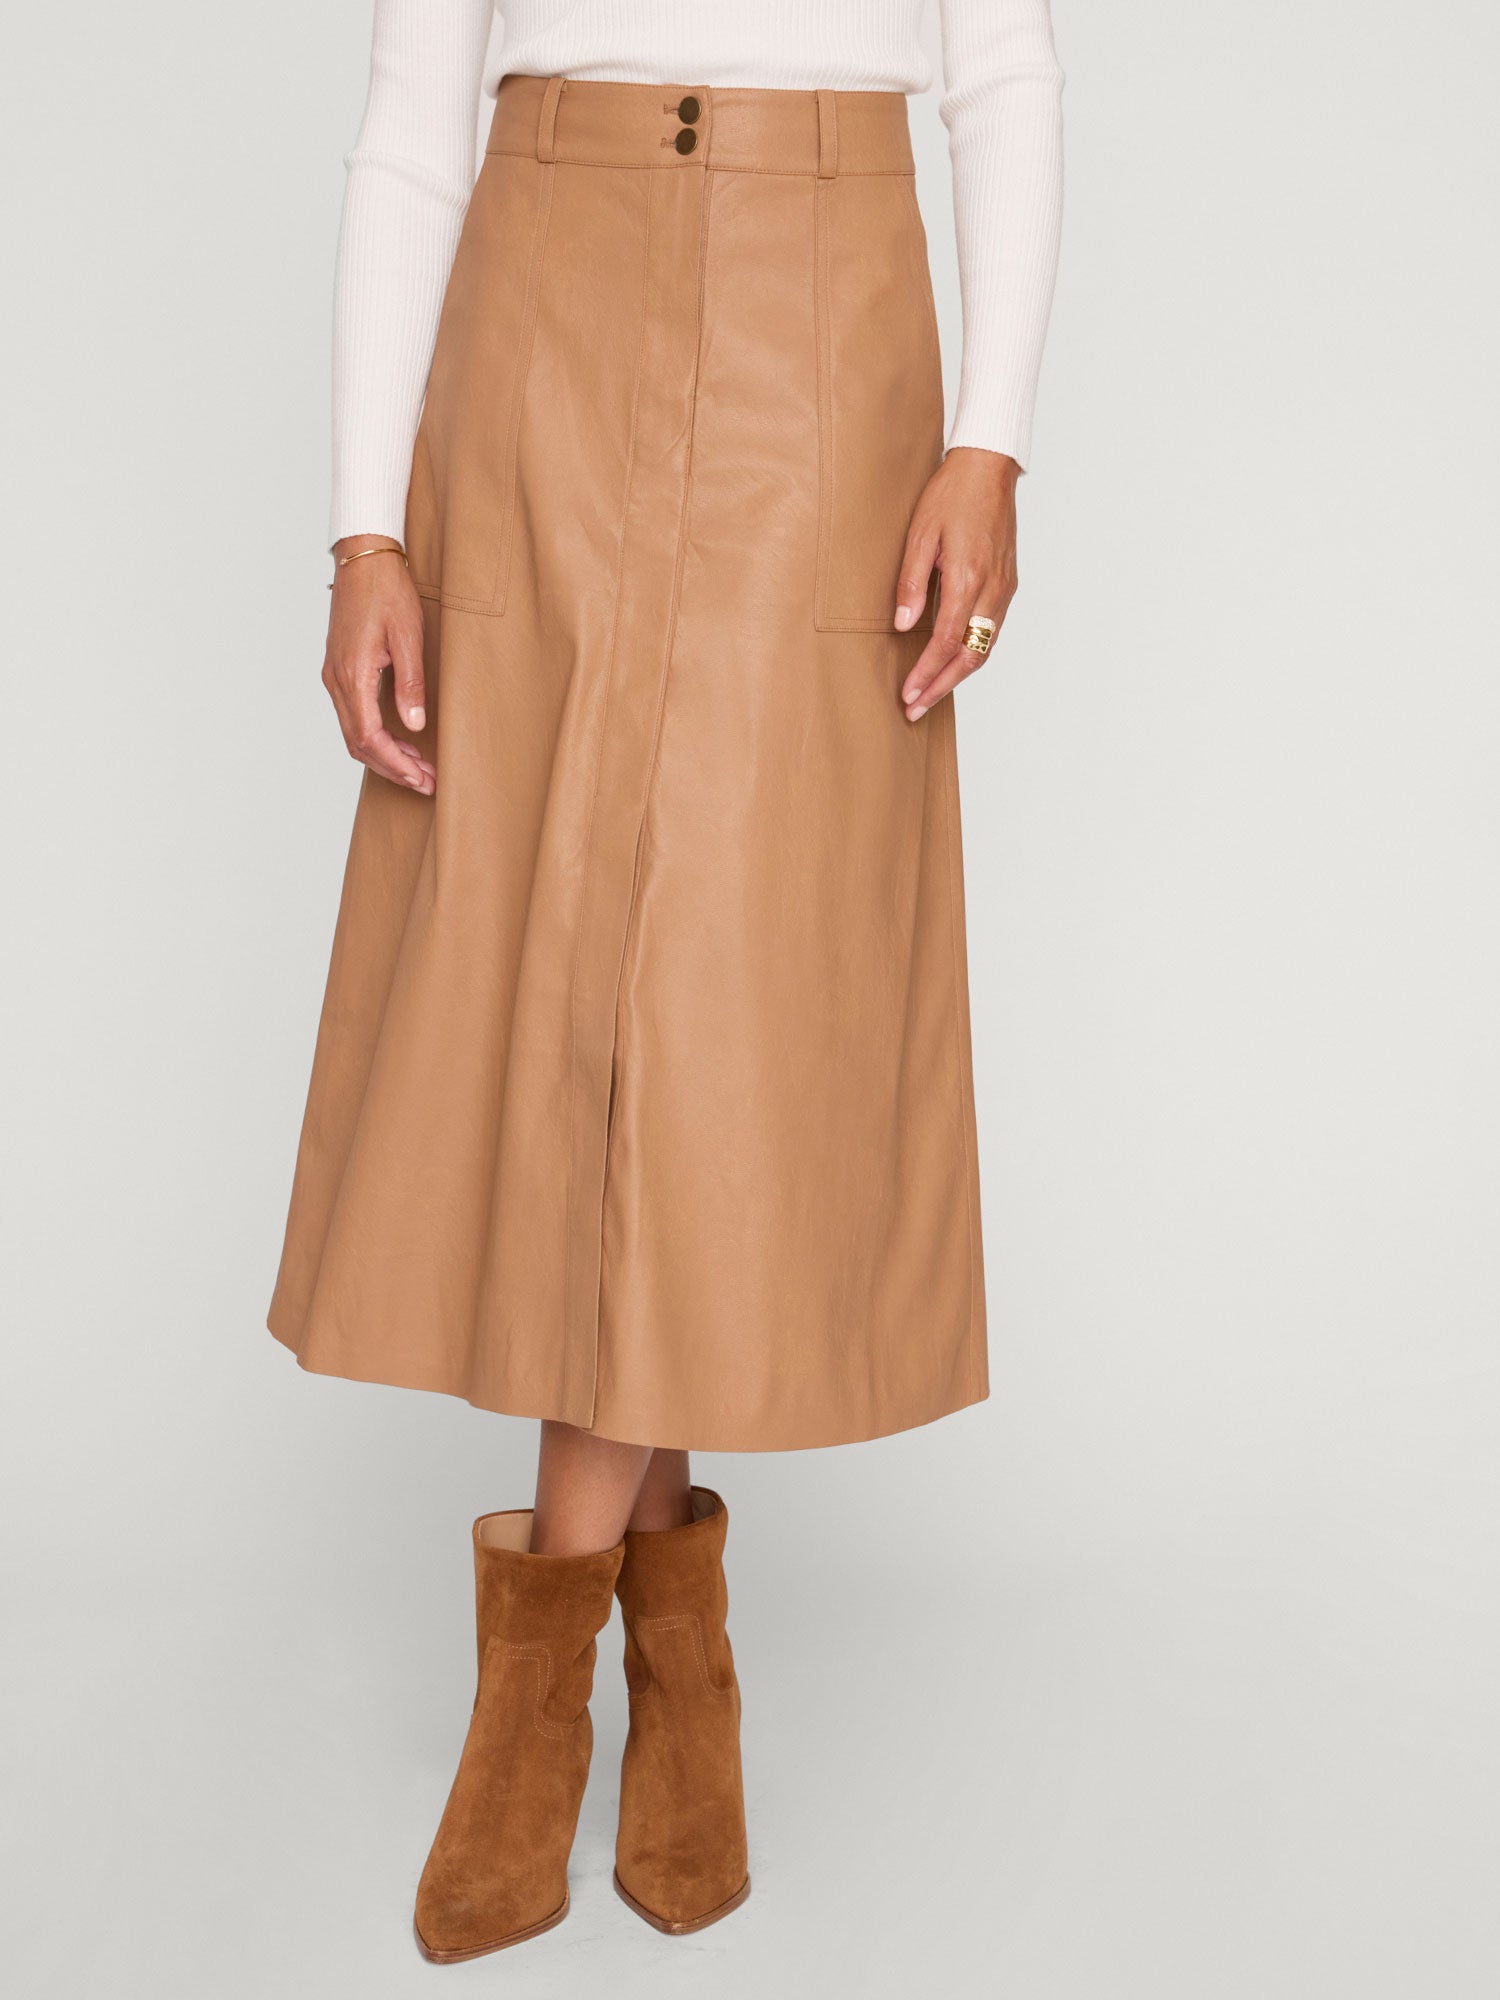 Mica vegan leather tan midi skirt front view